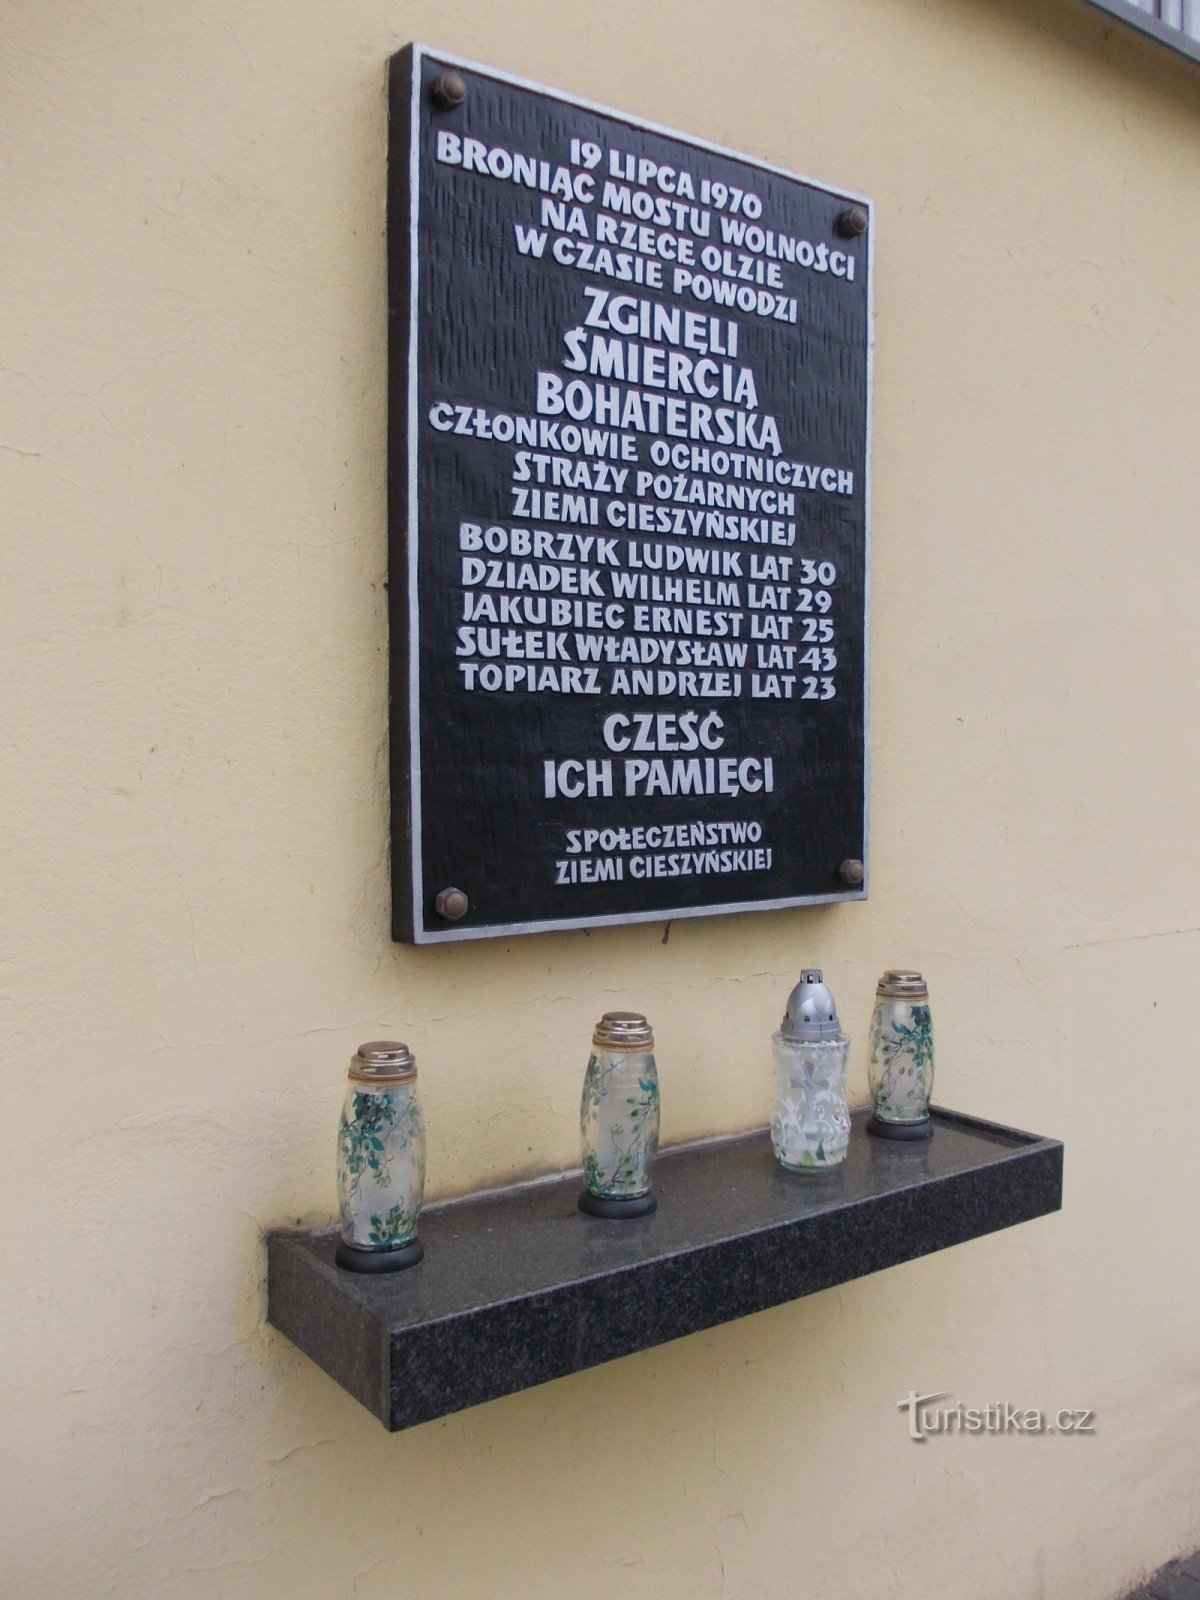 commemorative plaque for the tragic event of 1970